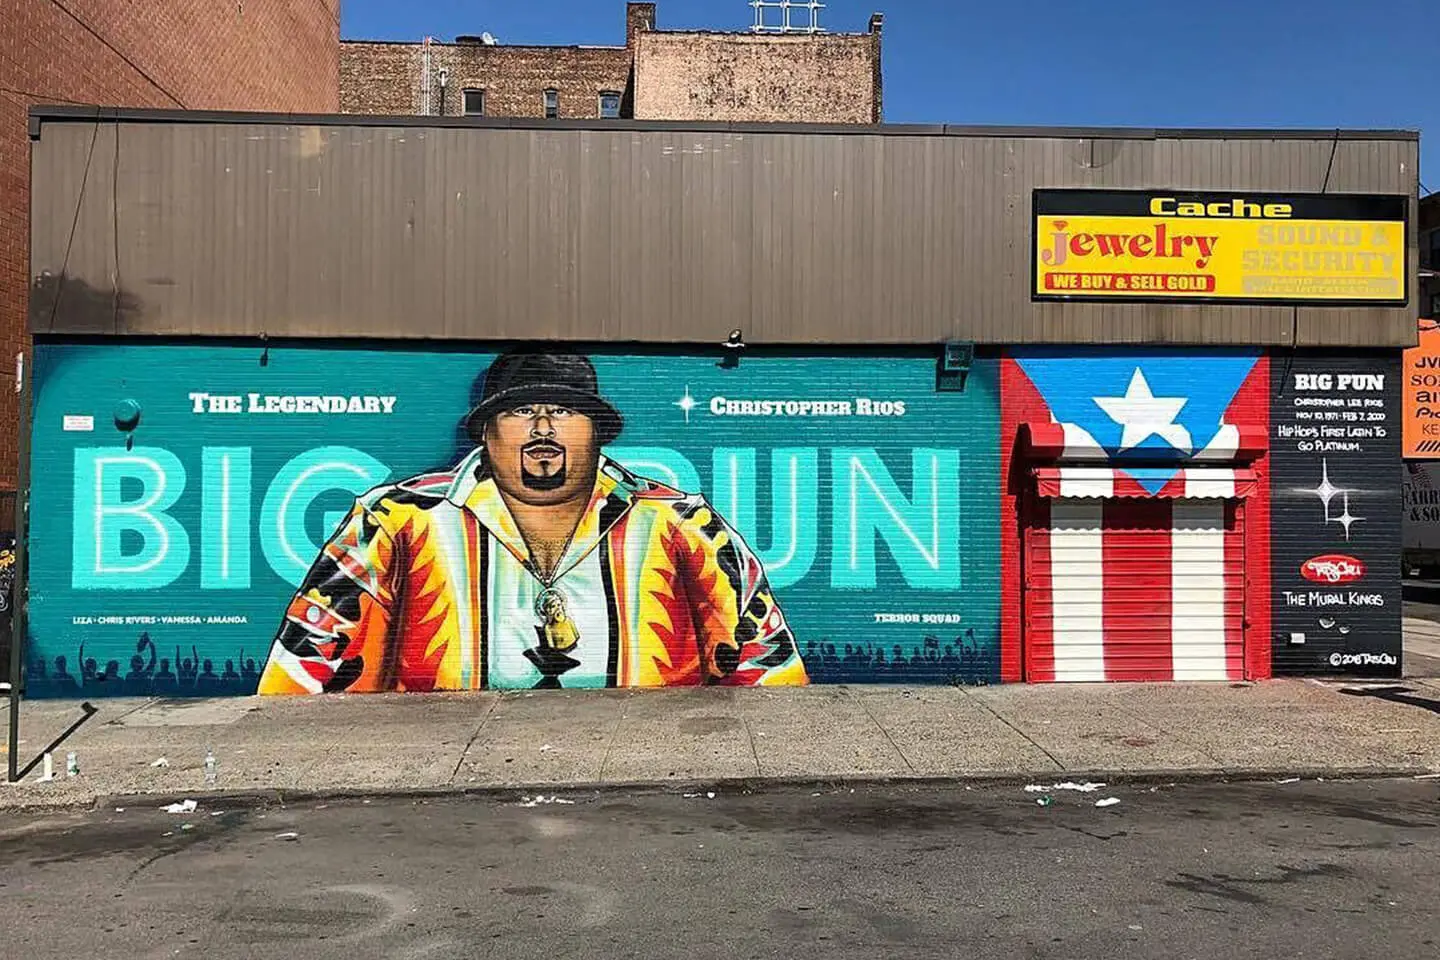 A vibrant street mural of notorious b.i.g., a legendary rapper, adorns a building's facade alongside urban storefronts in Manhattan.